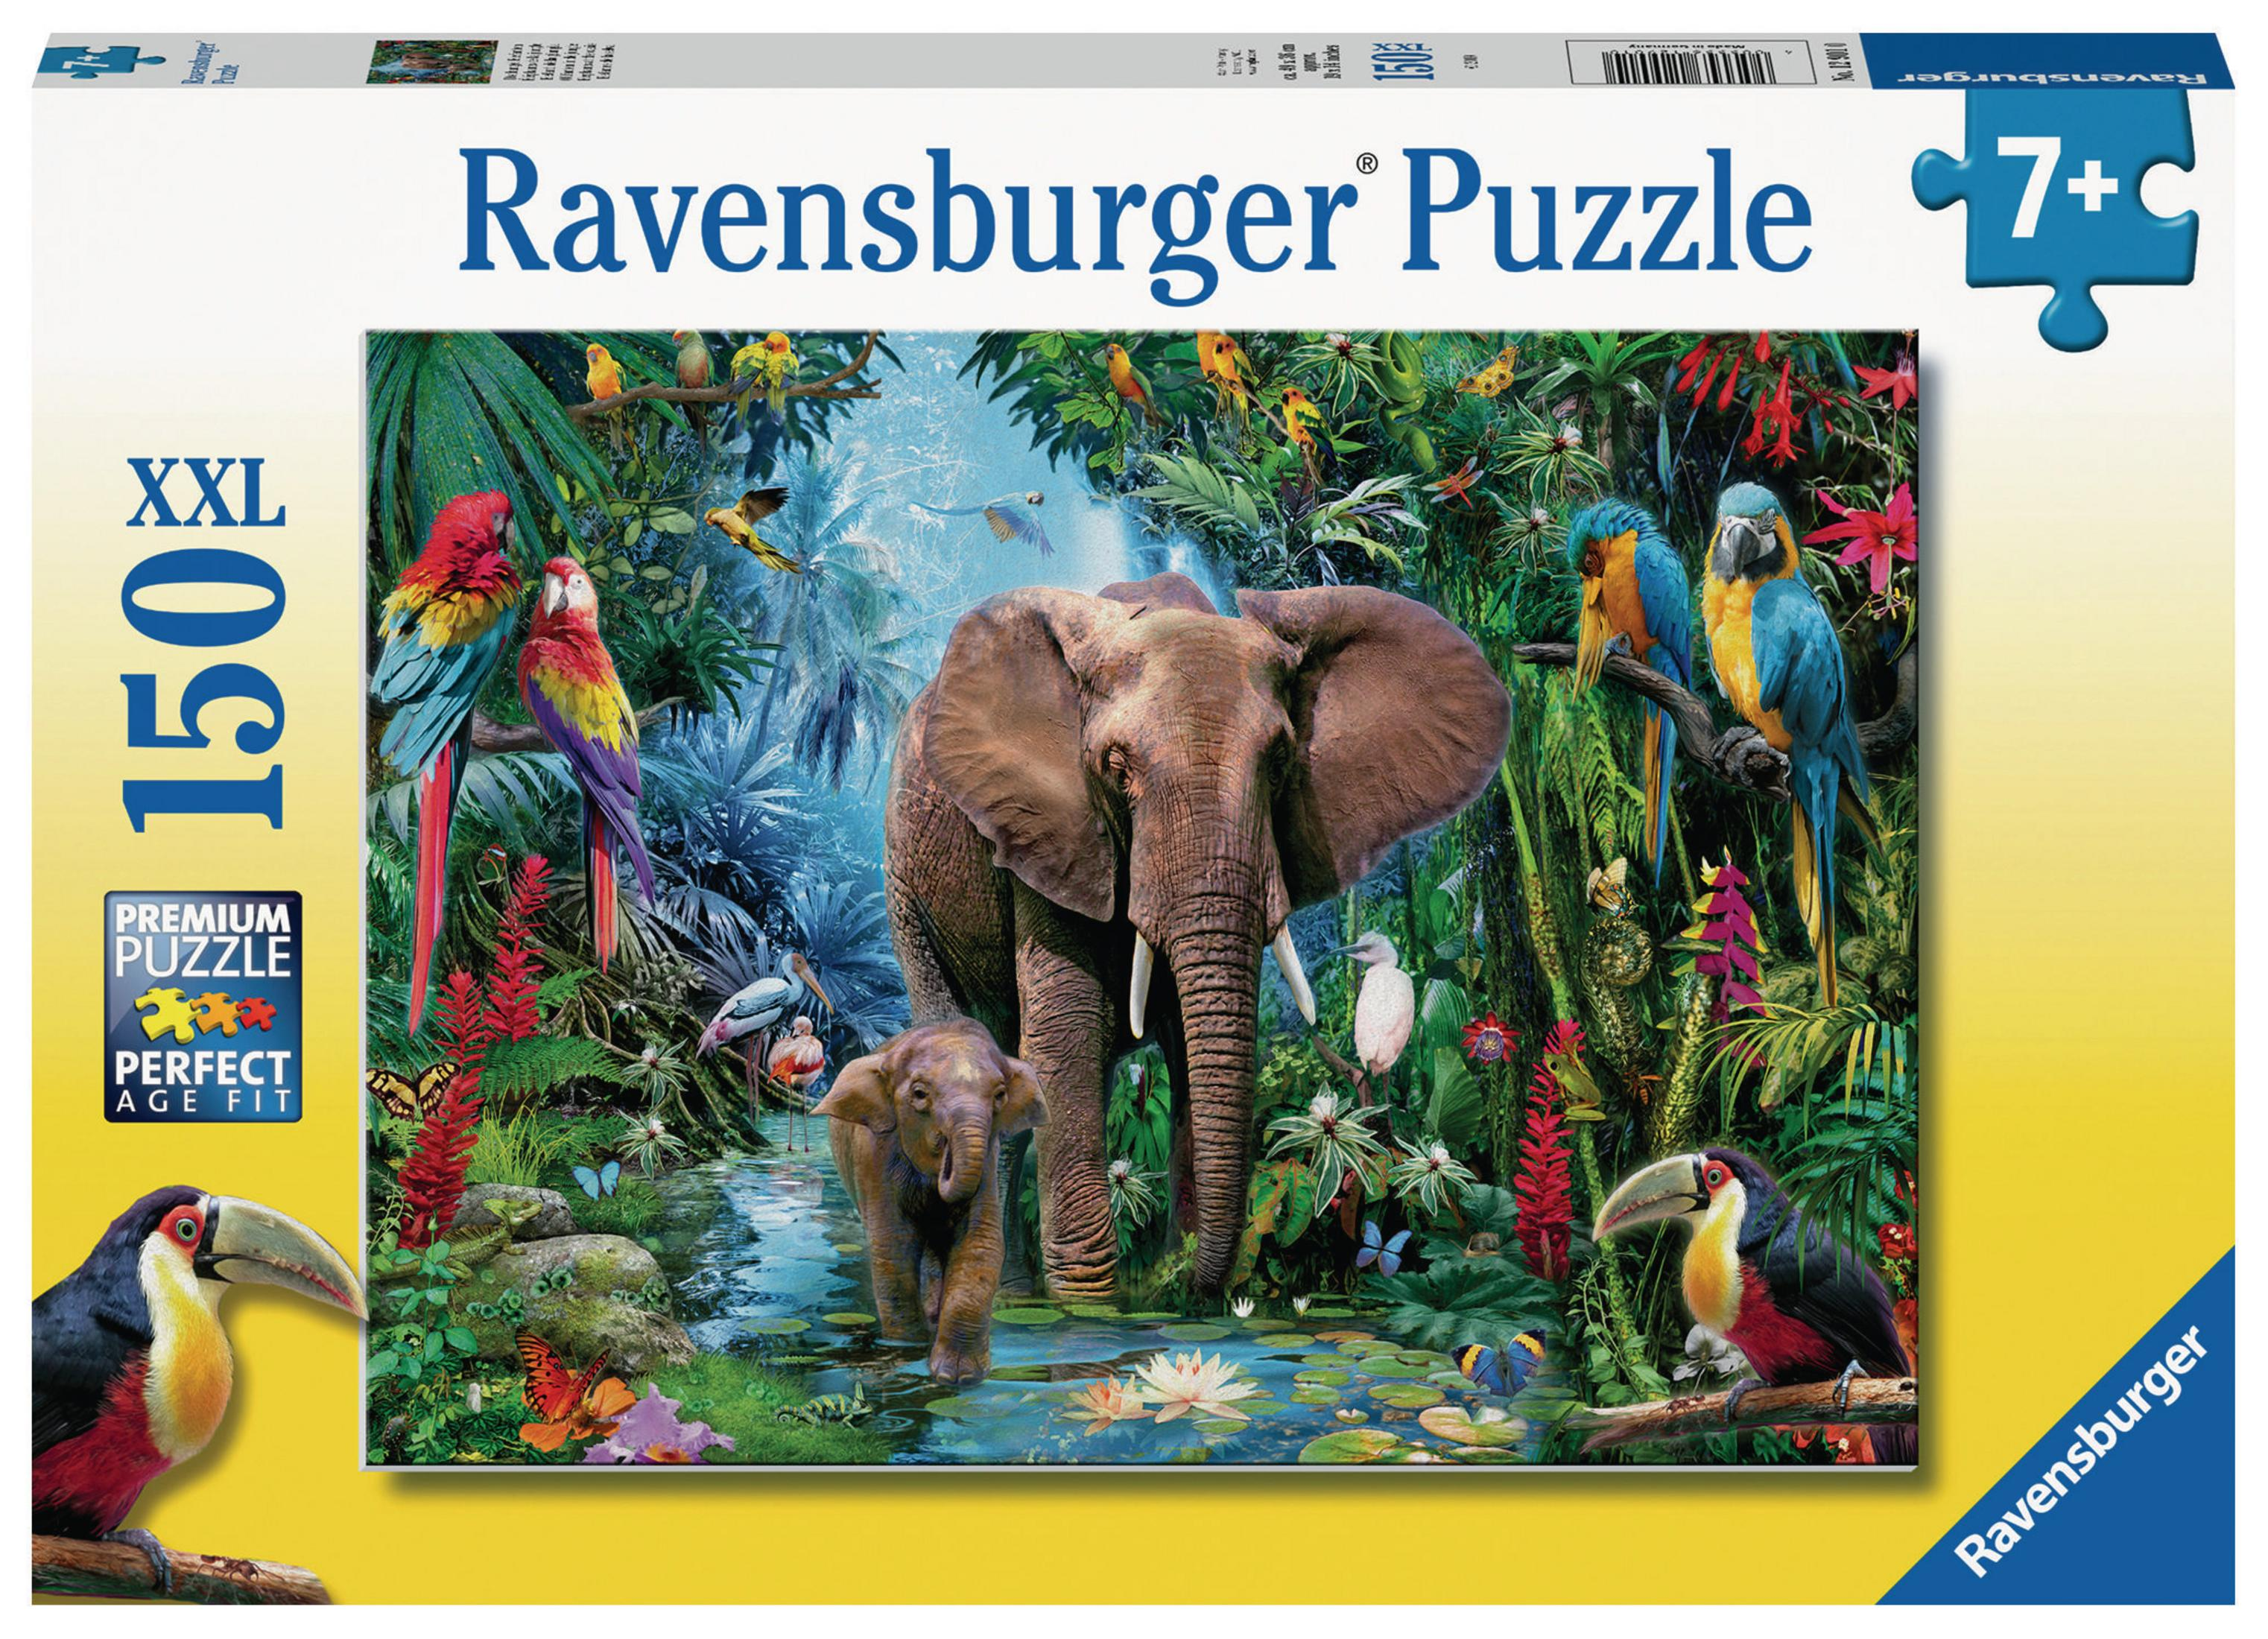 DSCHUNGELELEFANTEN 12901 RAVENSBURGER Puzzle